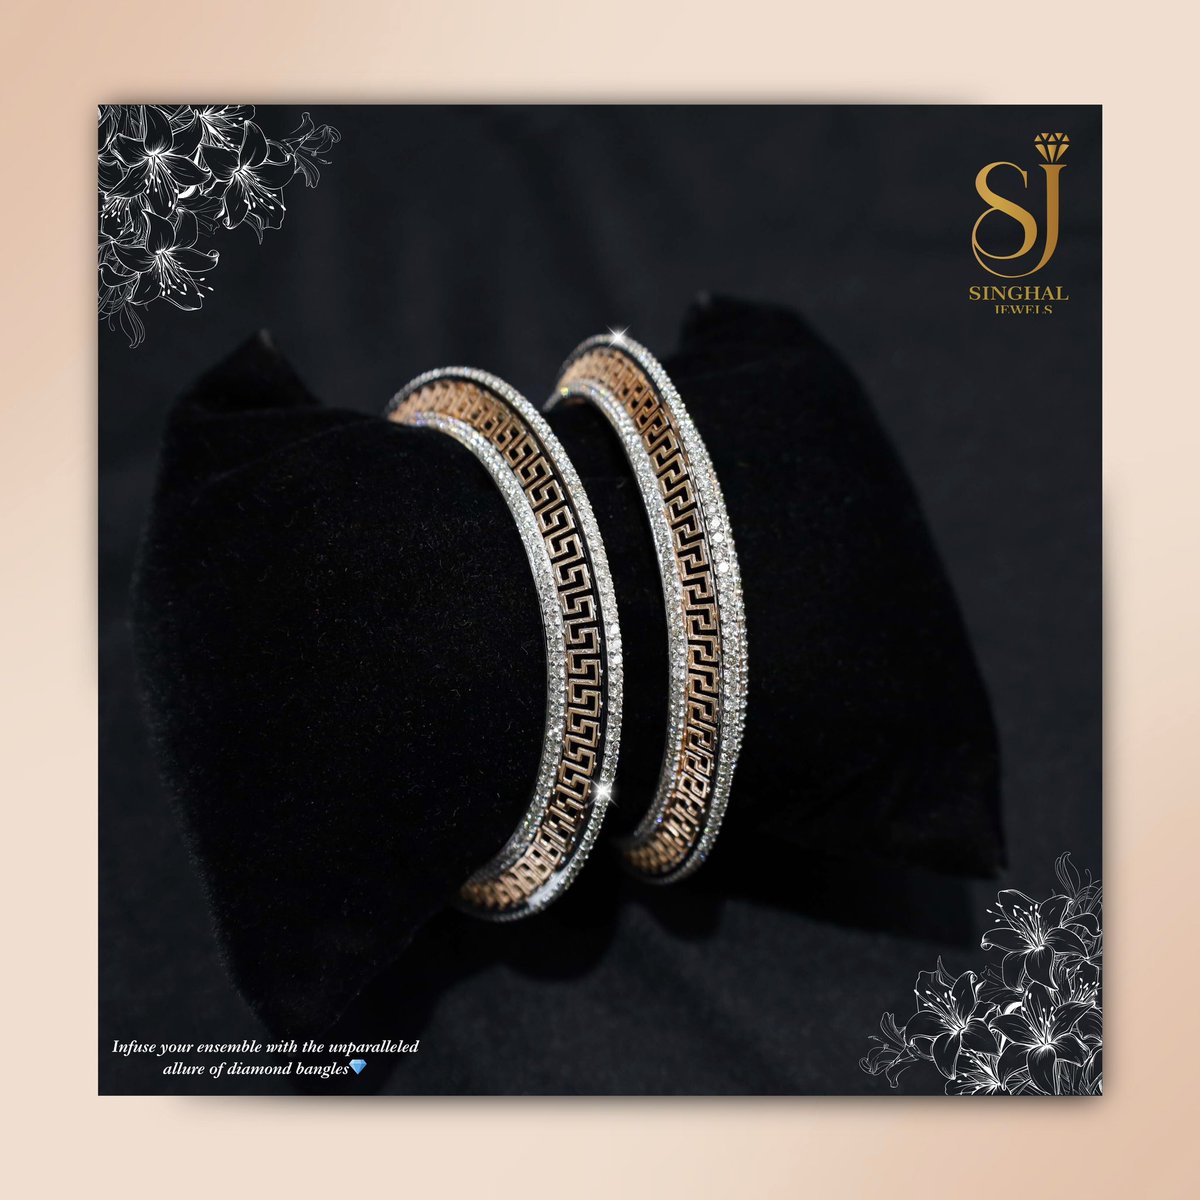 Infuse your ensemble with the unparalleled allure of diamond bangles💎
.
.
#trending #viral #tweet #x #diamonds #diamondjewelry #bangles #jewels #singhal #luxury #women #fashionstyle #diamondbangle #sj #jewellerydesign #love #diamondlover #loveisdiamond